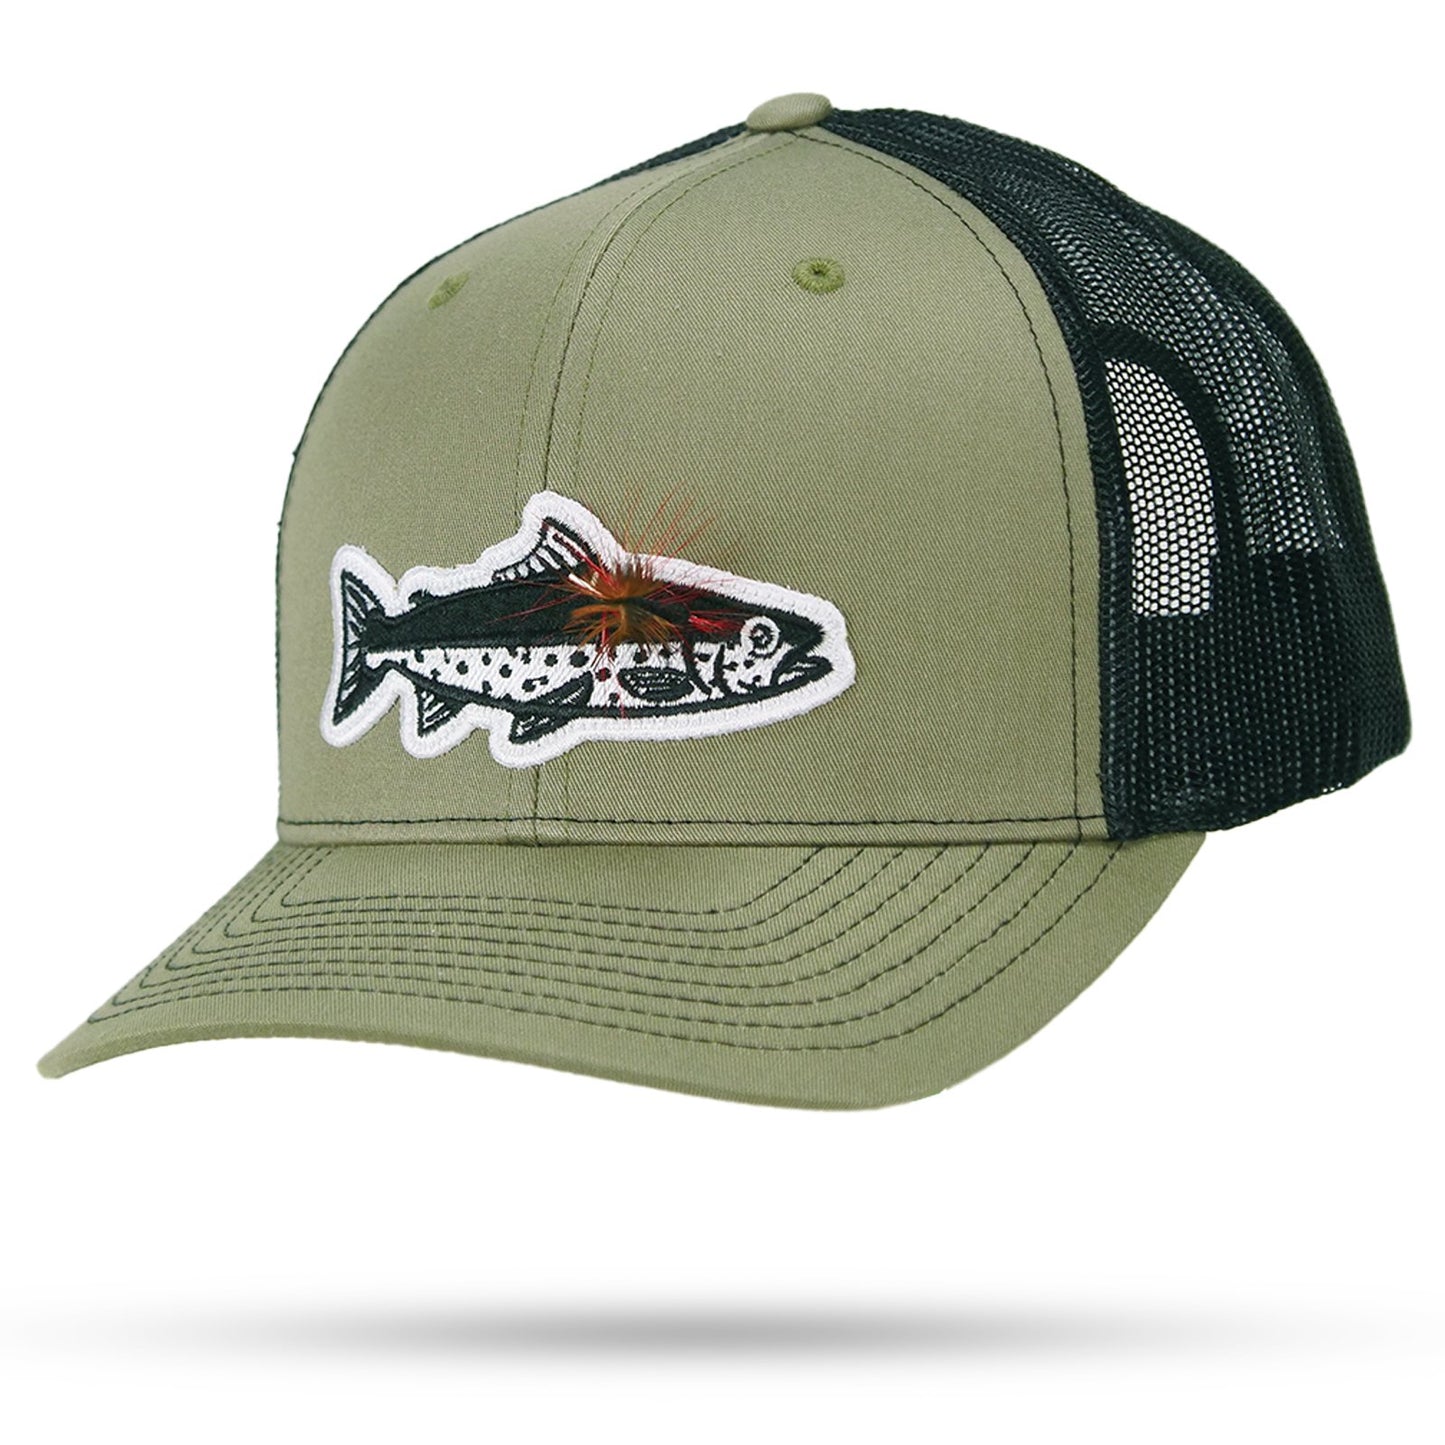  Fishing Hats - Hook And Loop / Fishing Hats / Fishing